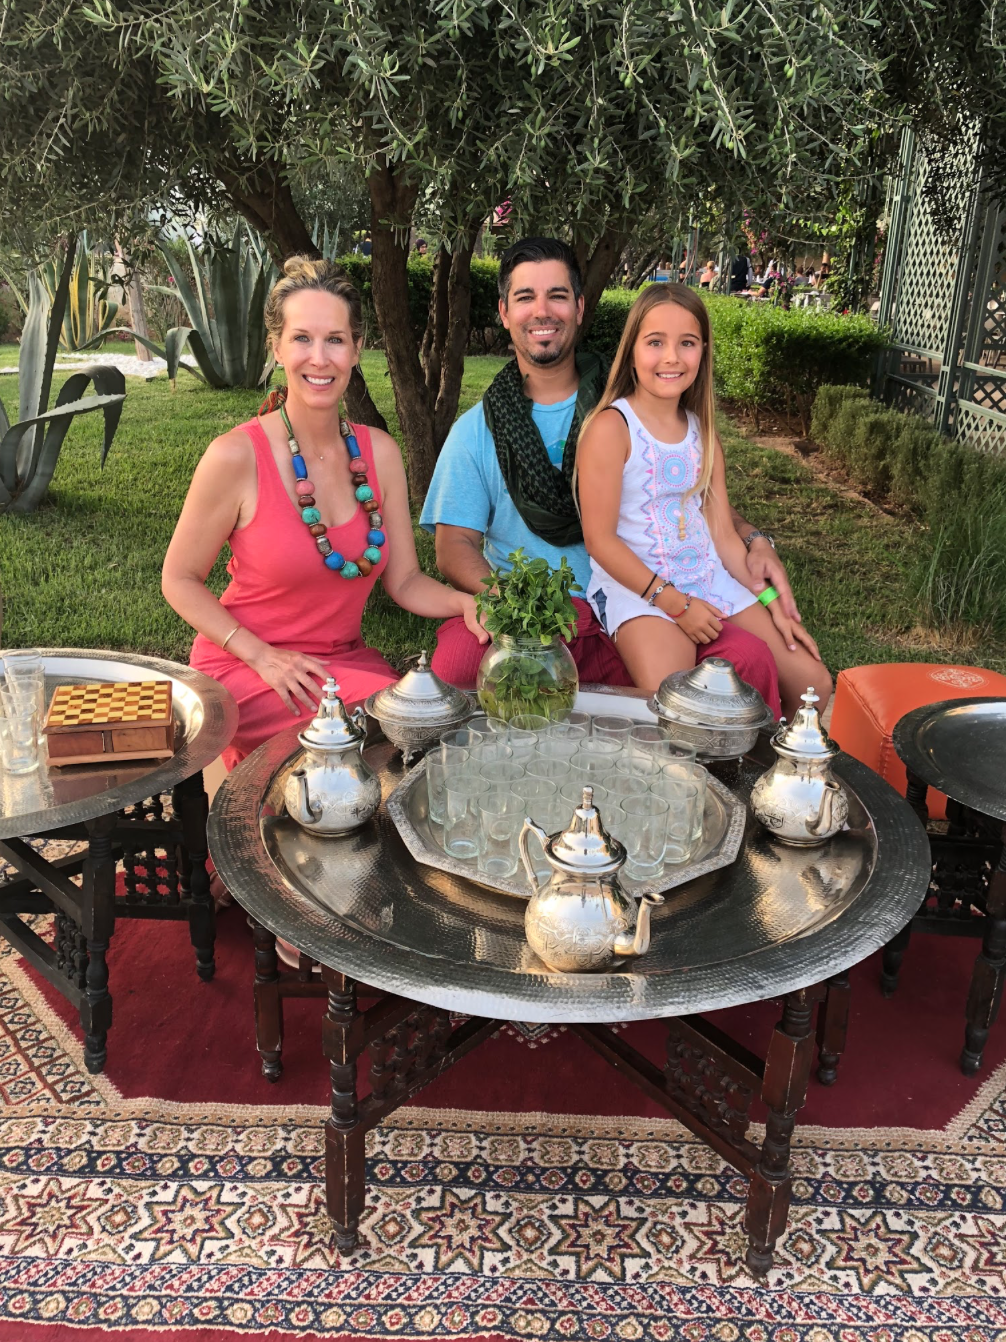 Celebrity Interior Designer Lori Dennis with family dining in Morocco